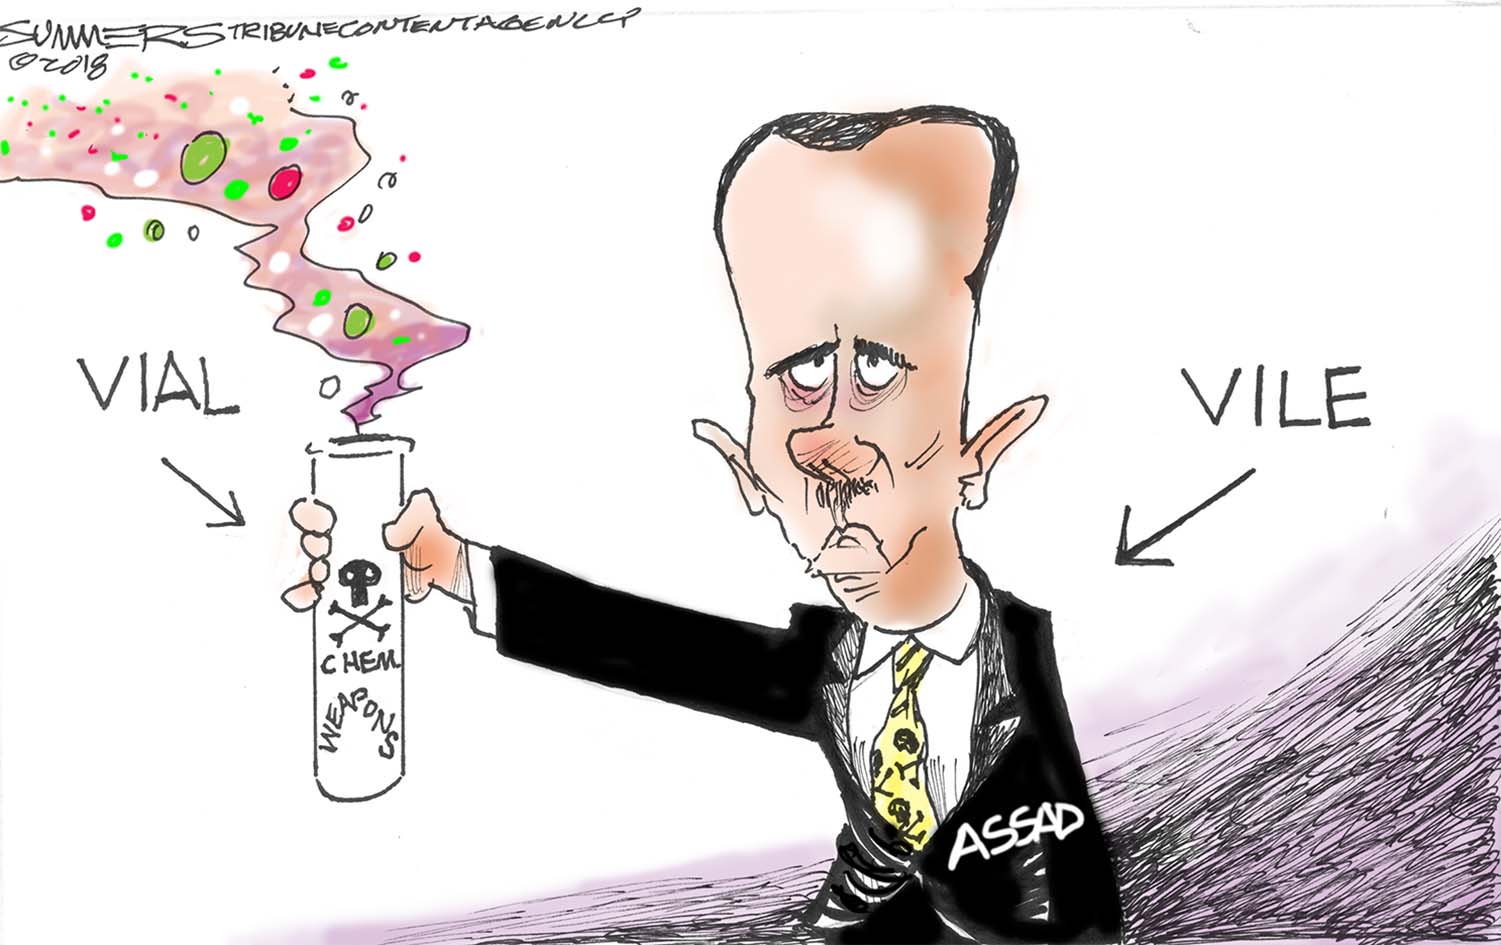 Political cartoon . Syria conflict chemical attacks Assad vile